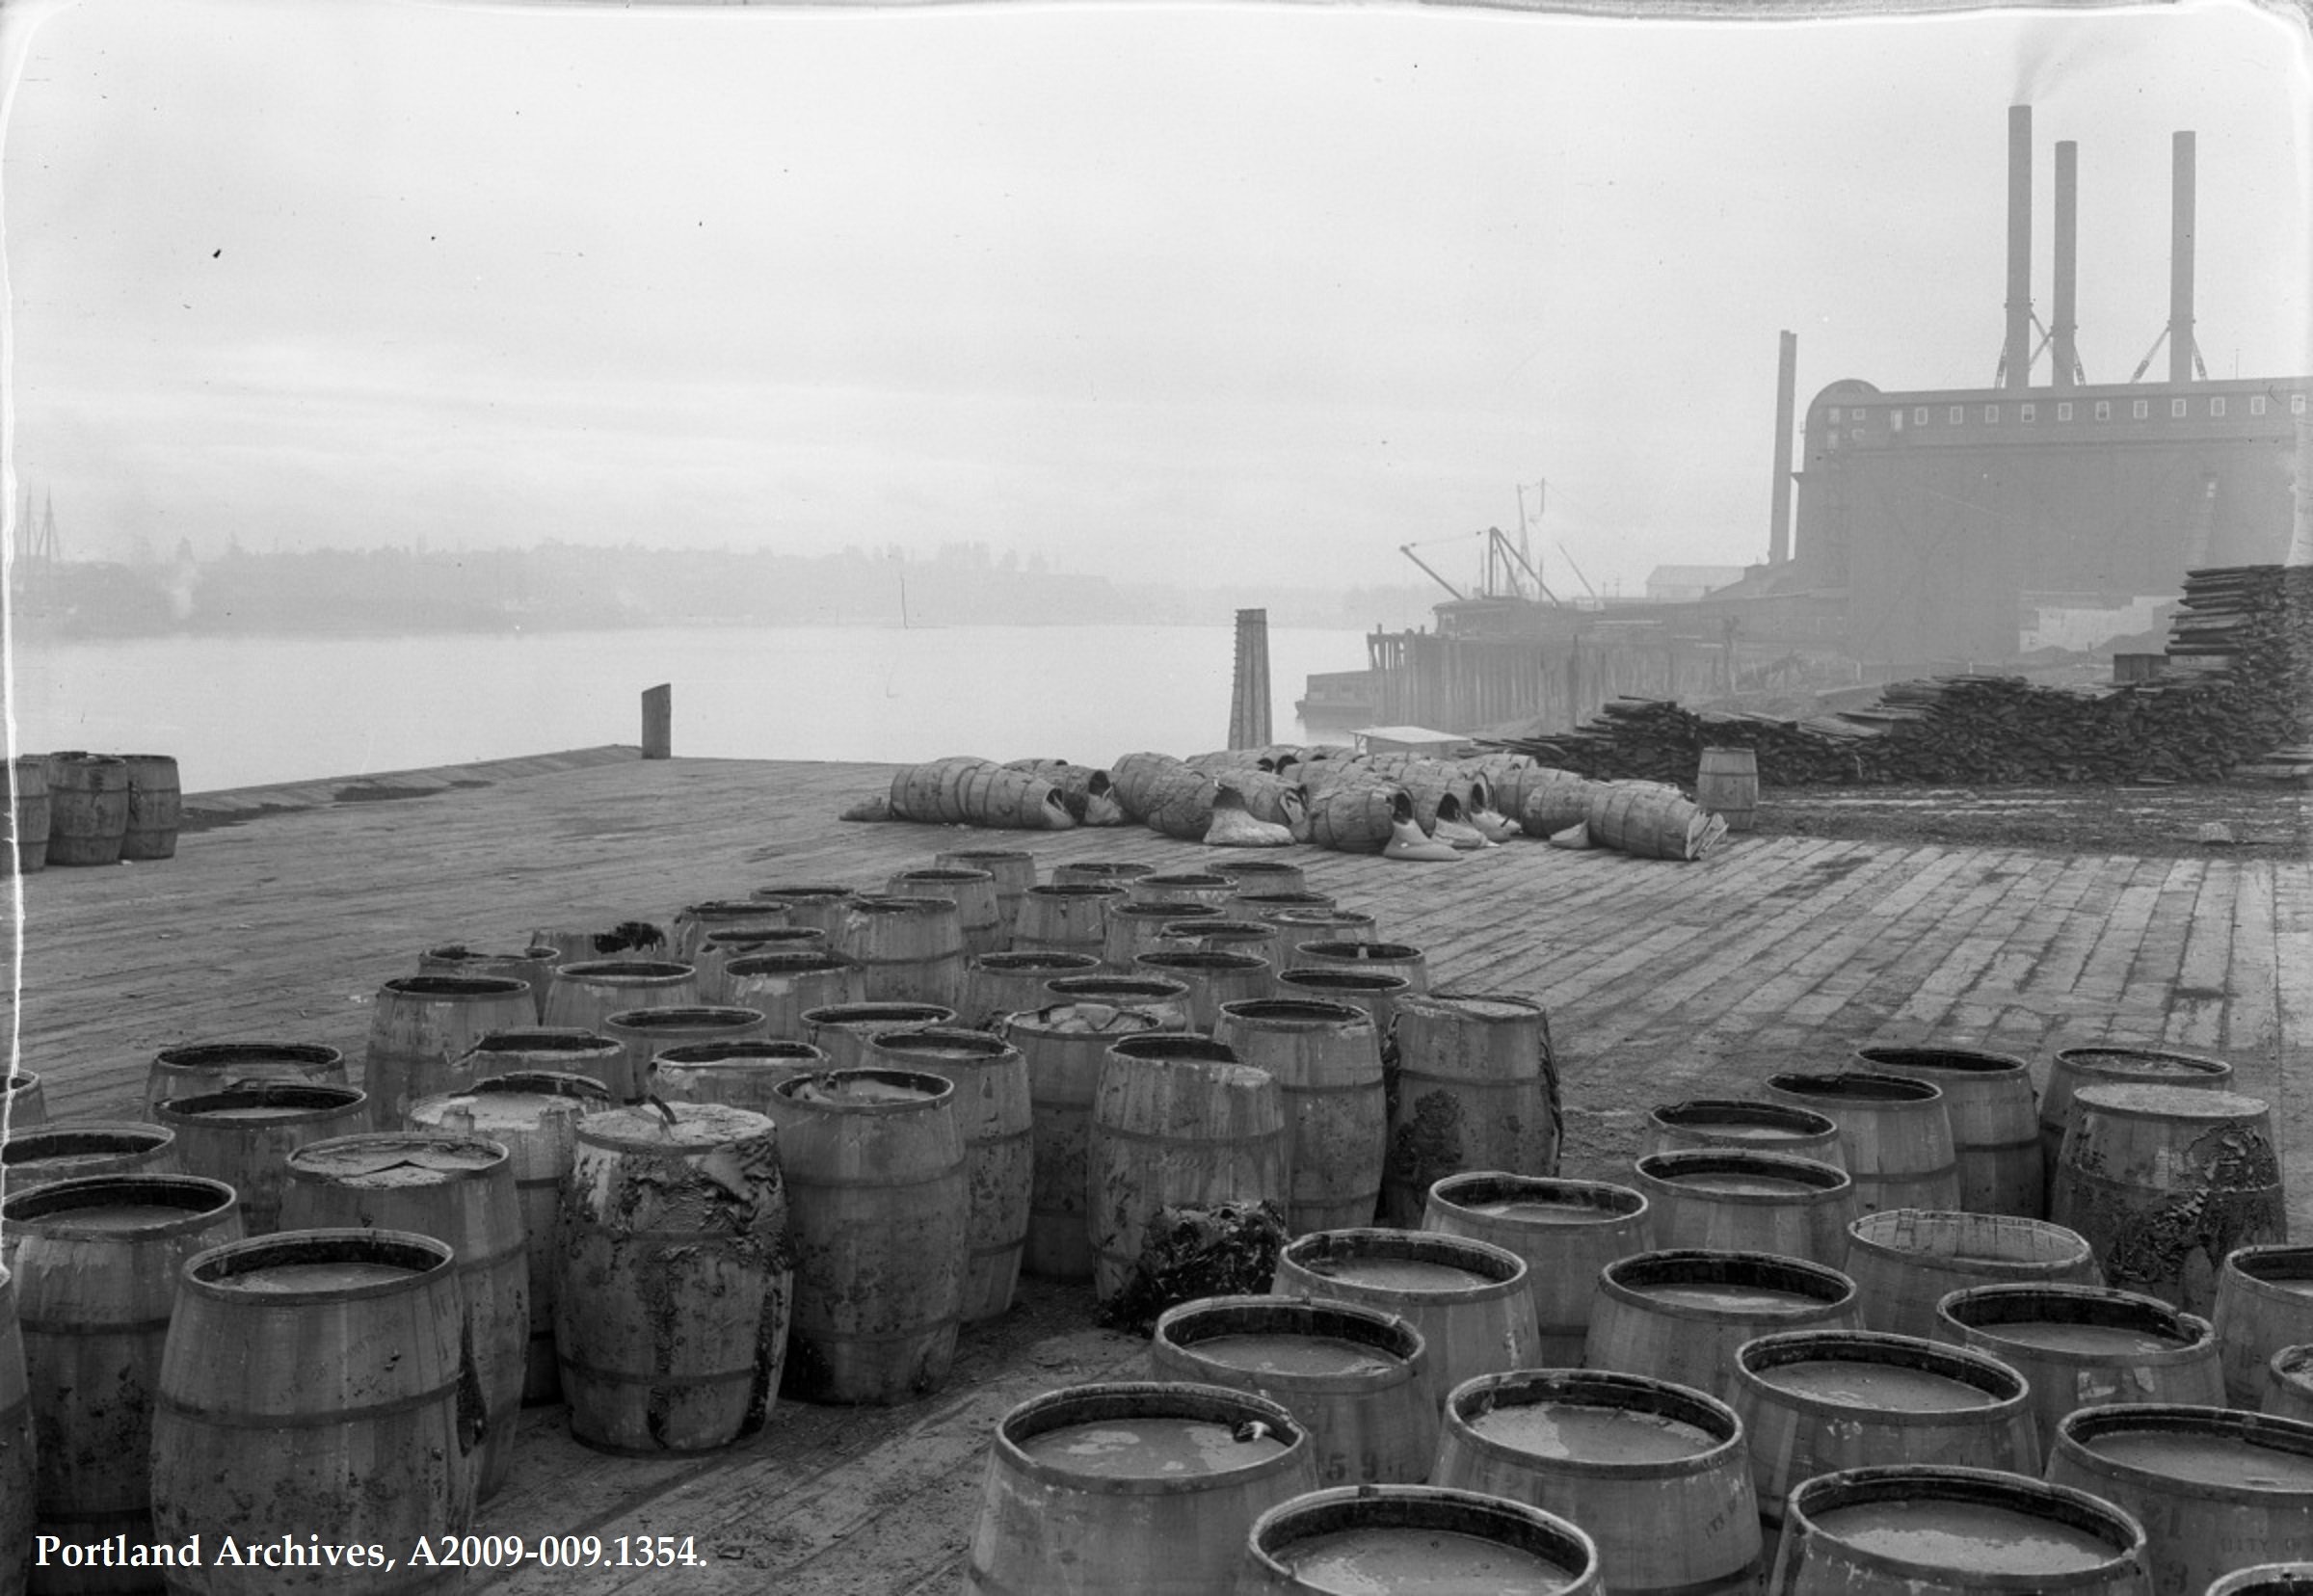 1 - Barrels on Dock - Public Works Administration (Archival) - Public Works Administrator - Photographs - A2009-009.1354   SW Jefferson St 1924.JPG